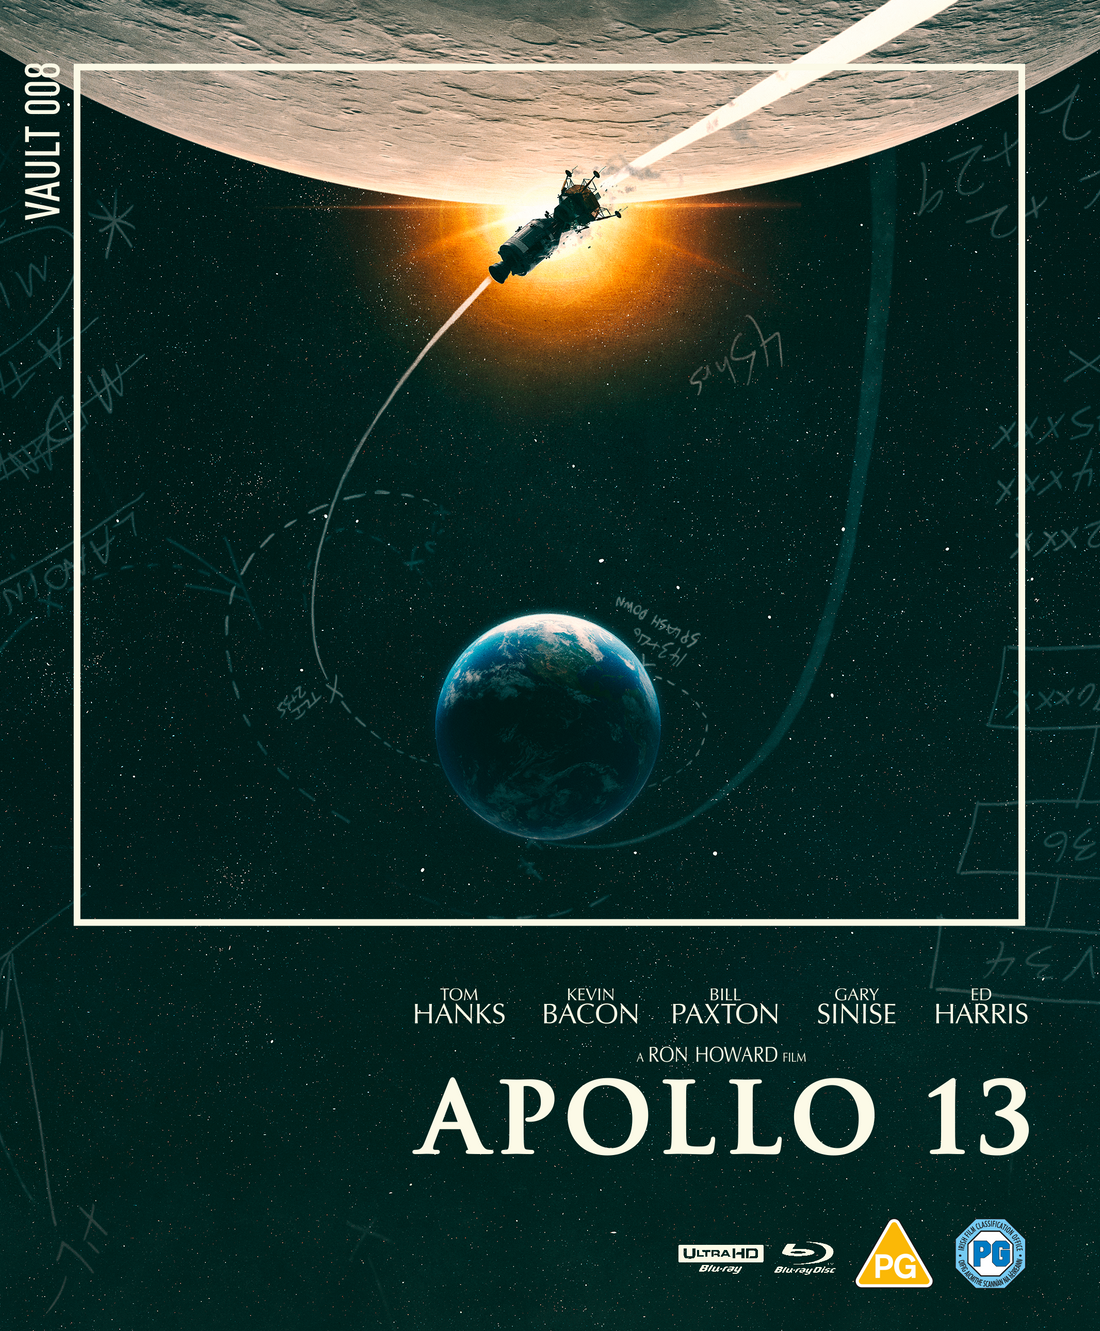 Apollo 13 The Film Vault Movie 4K UHD Cover By Matt Ferguson & Florey